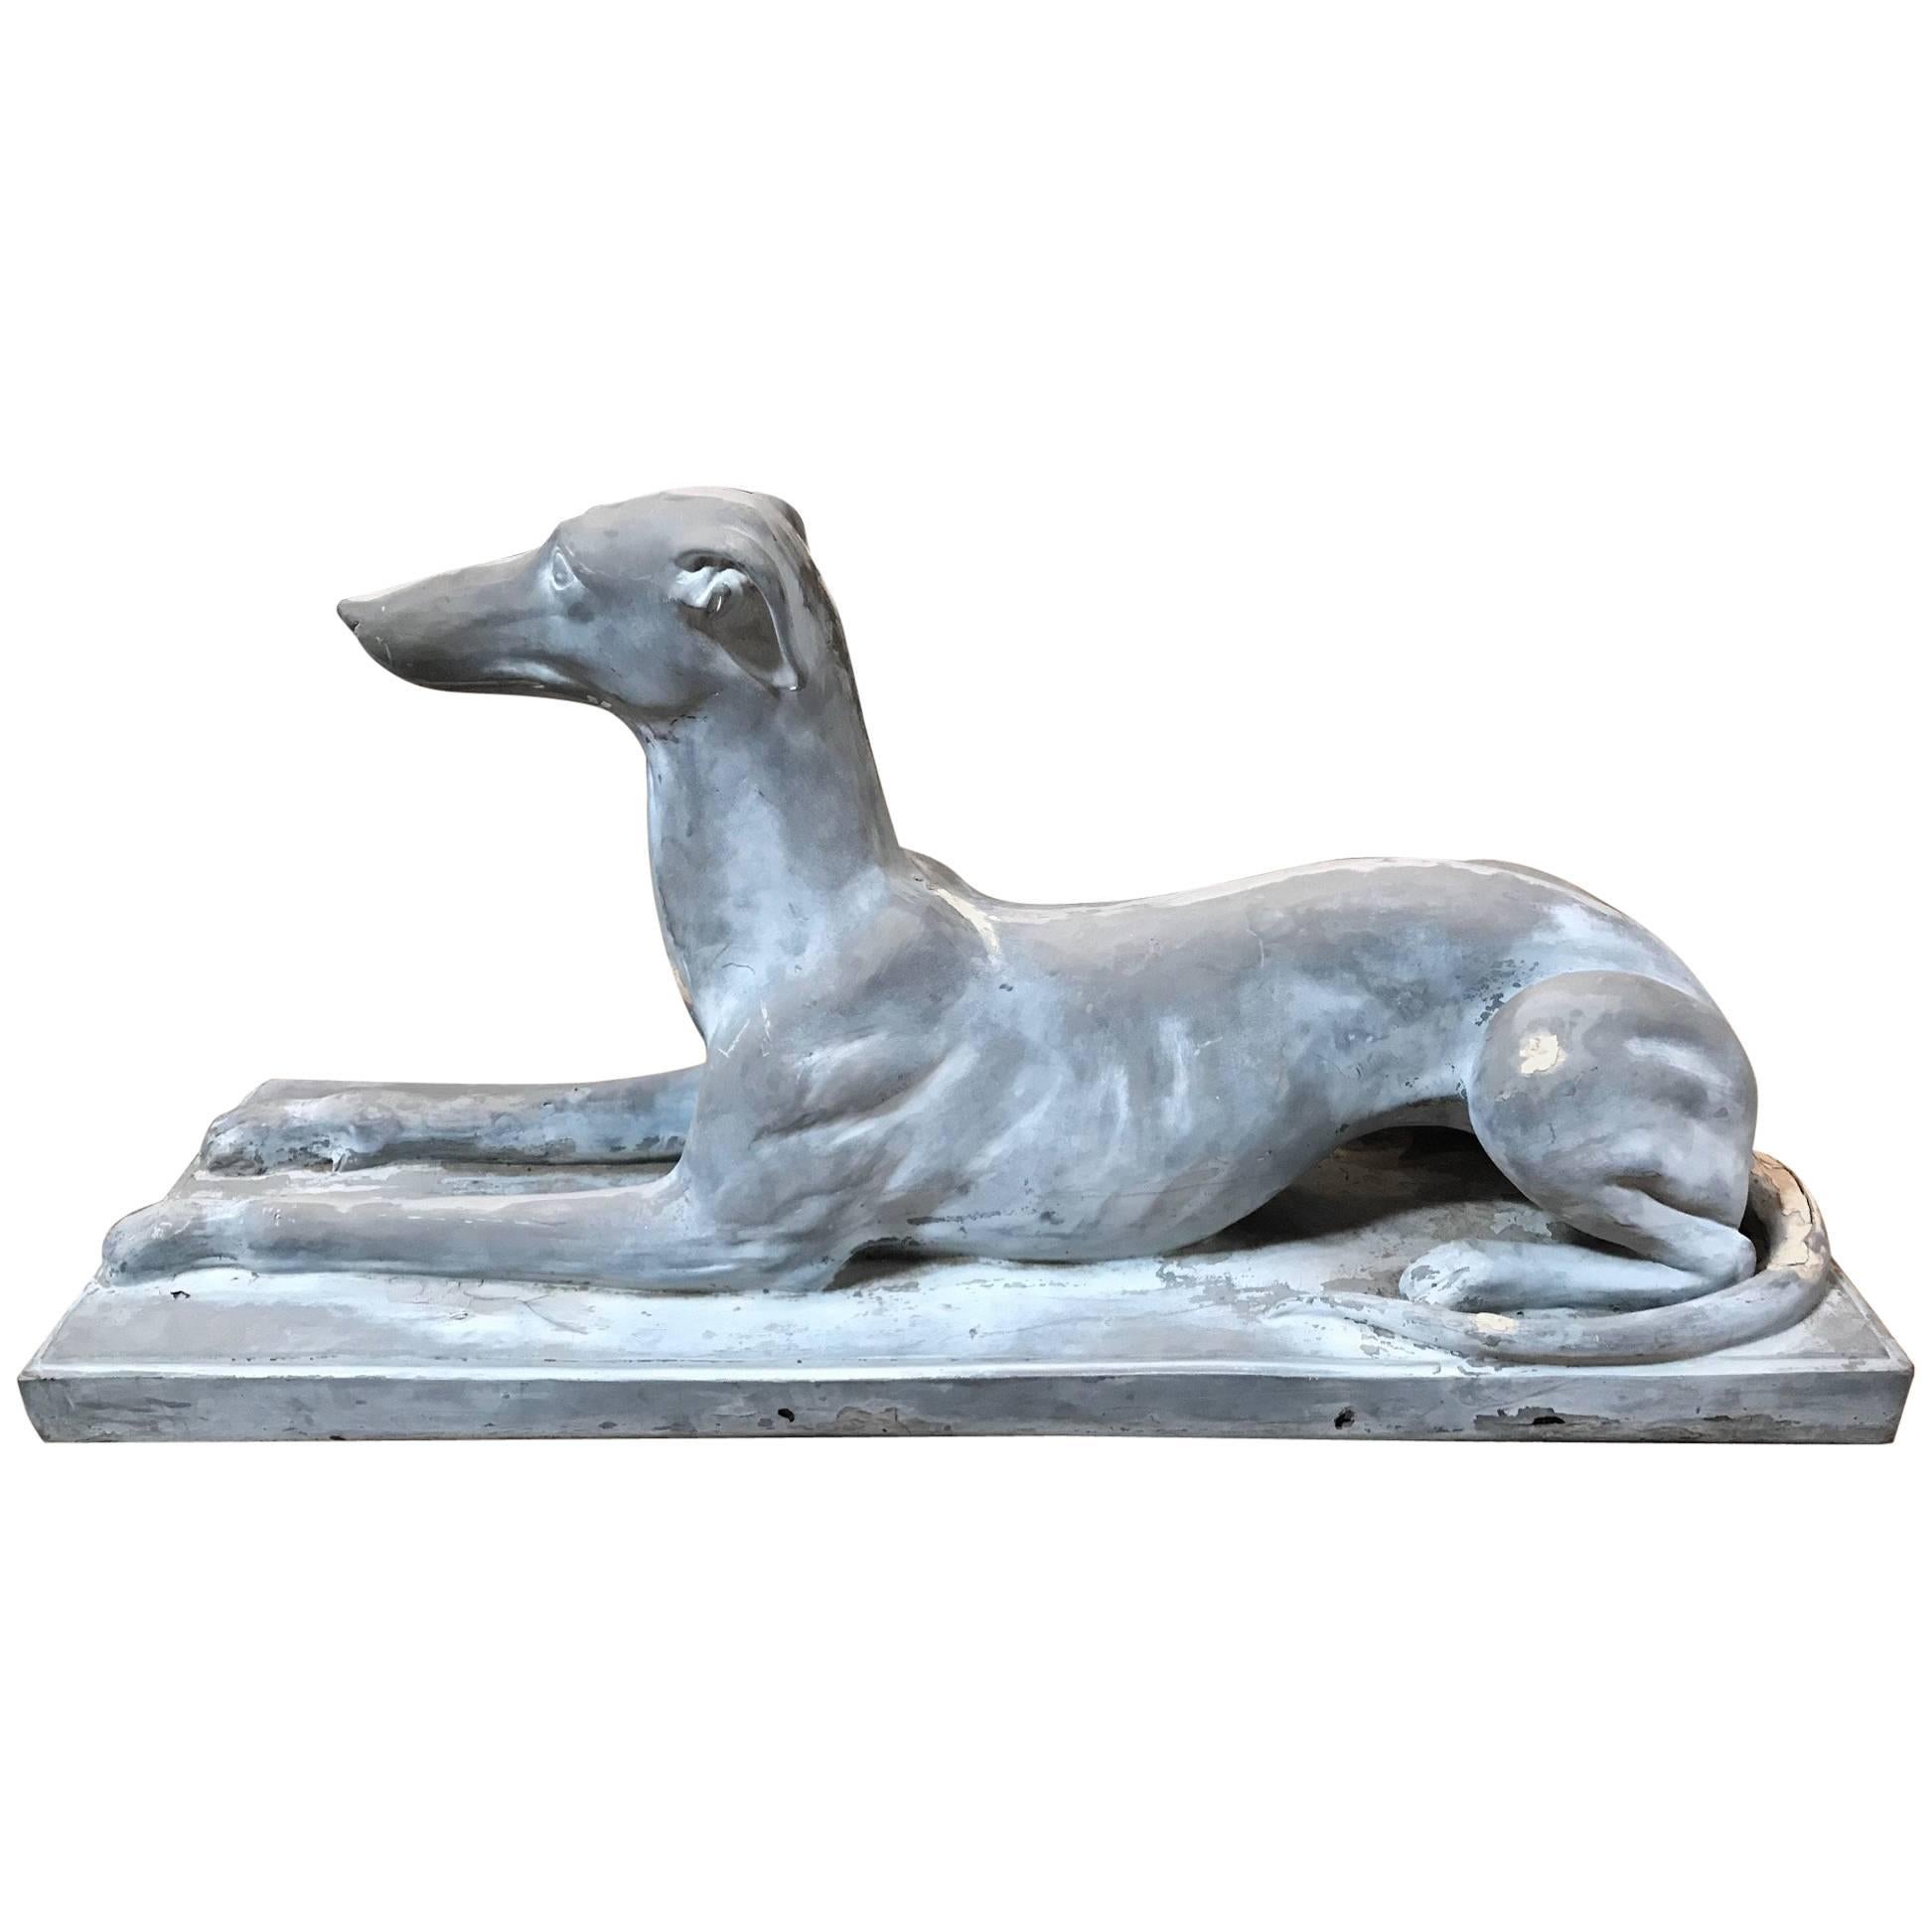 1940s Greyhound Sculpture of a Whippet